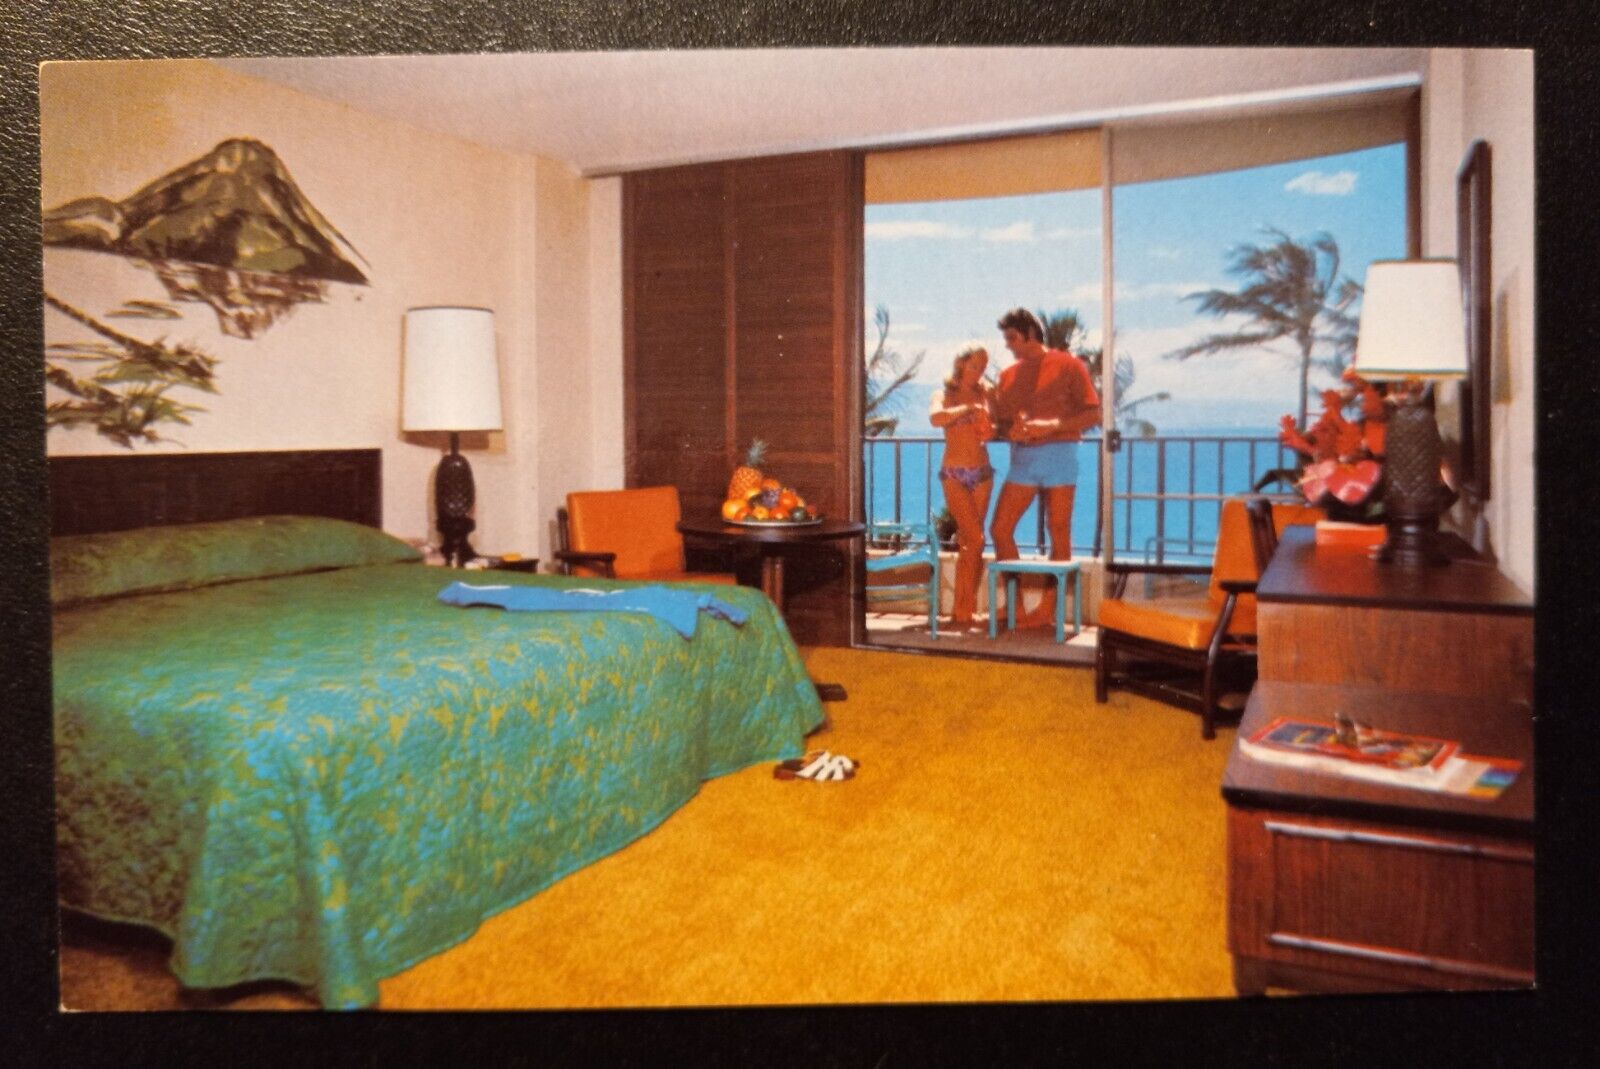 Royal Lahaina Hotel Kaanapali Beach Maui Hawaii HI Interior Room Postcard VTG 